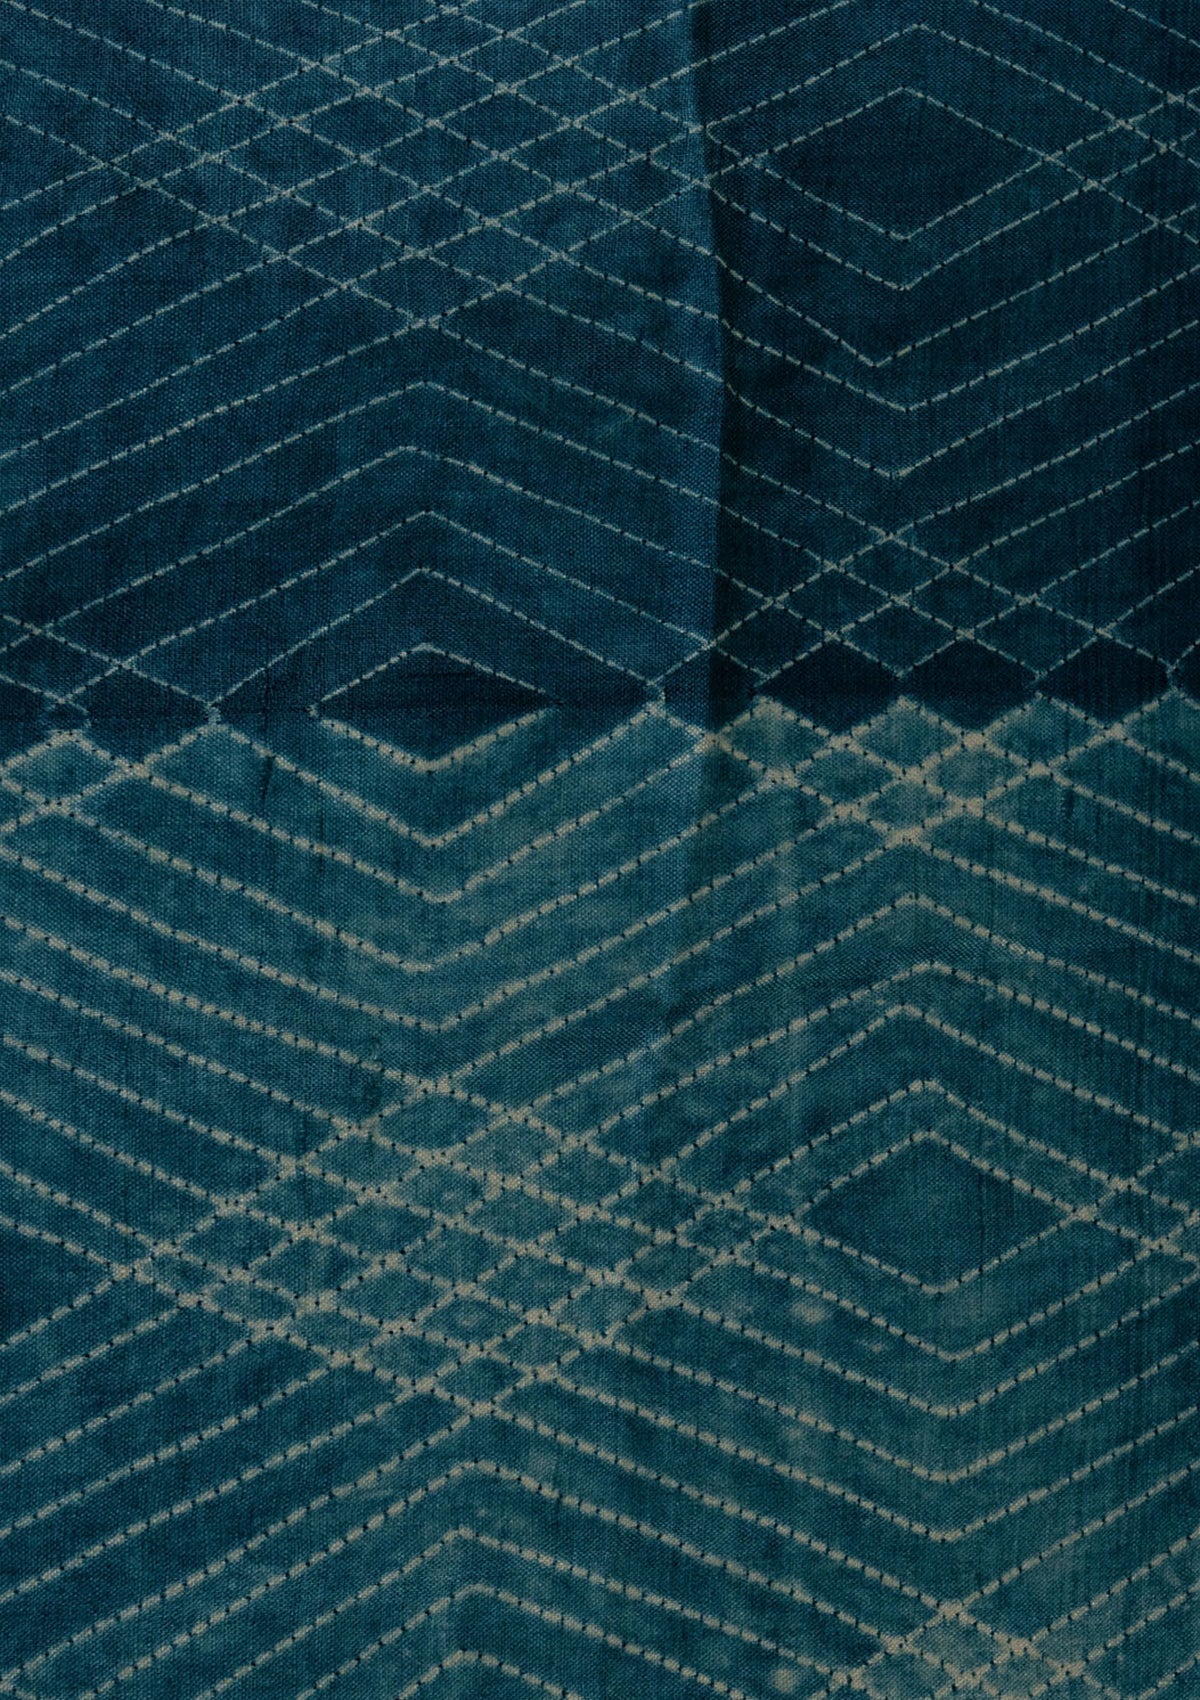 Handwoven Azure Blue Shibori Fabric